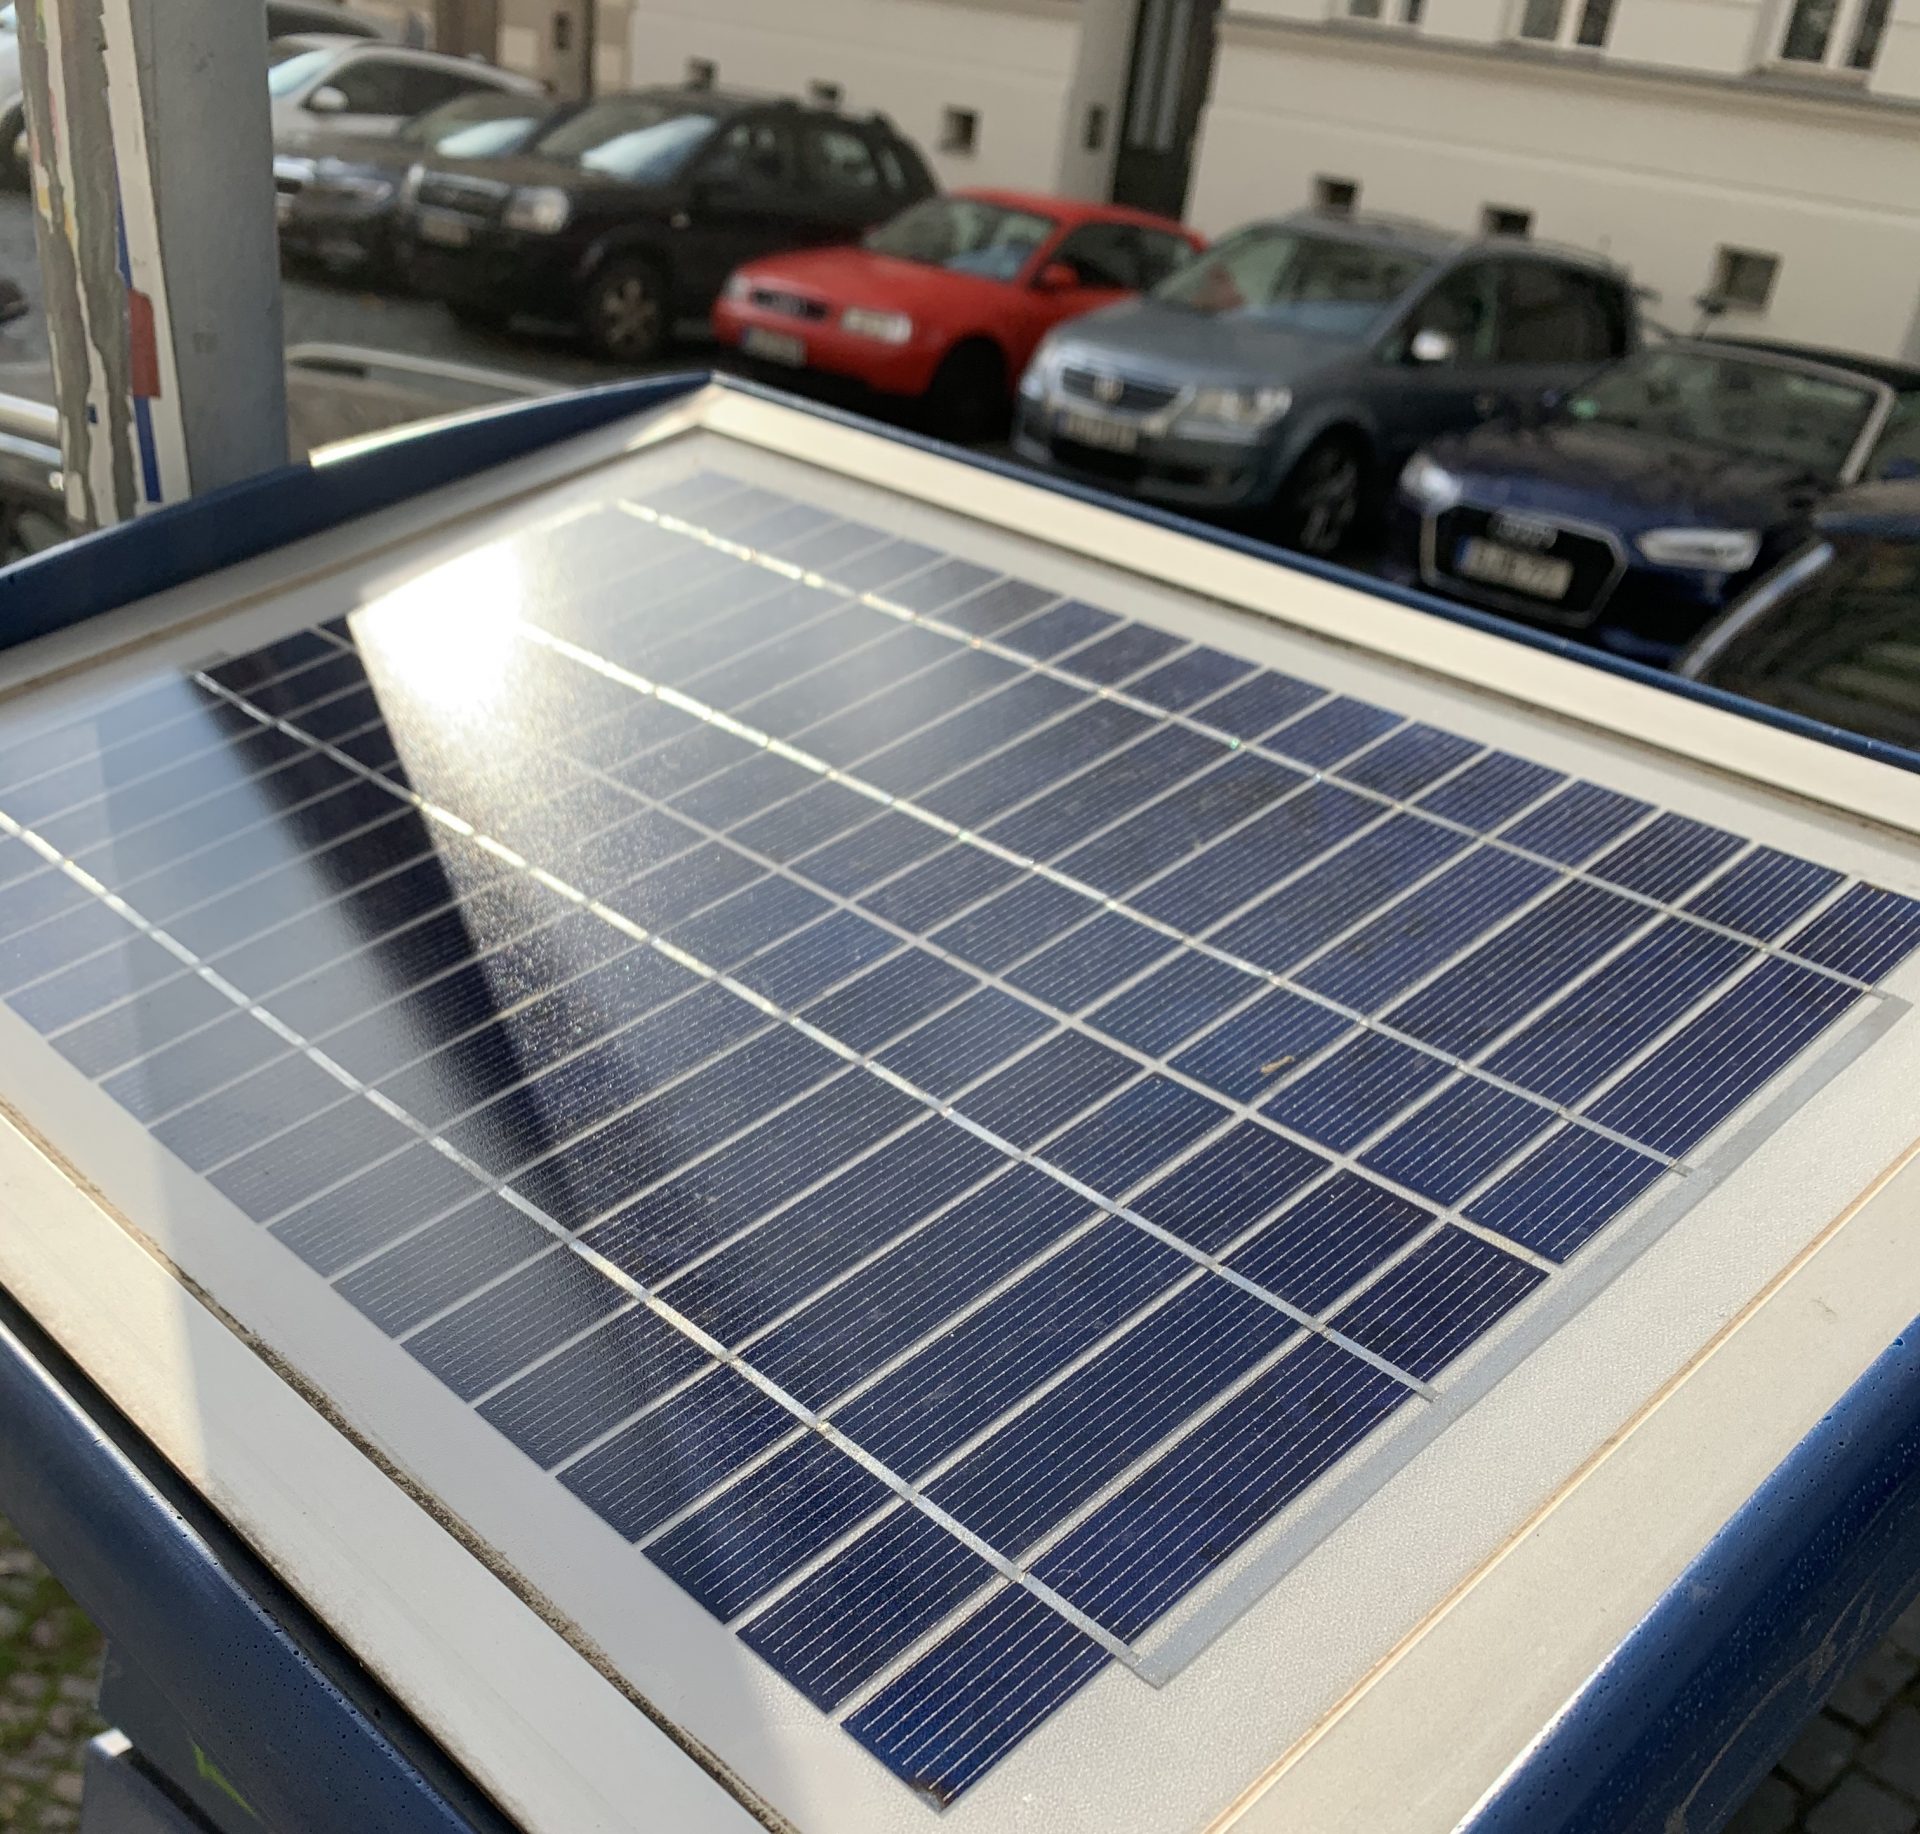 Solar module.on parking meter